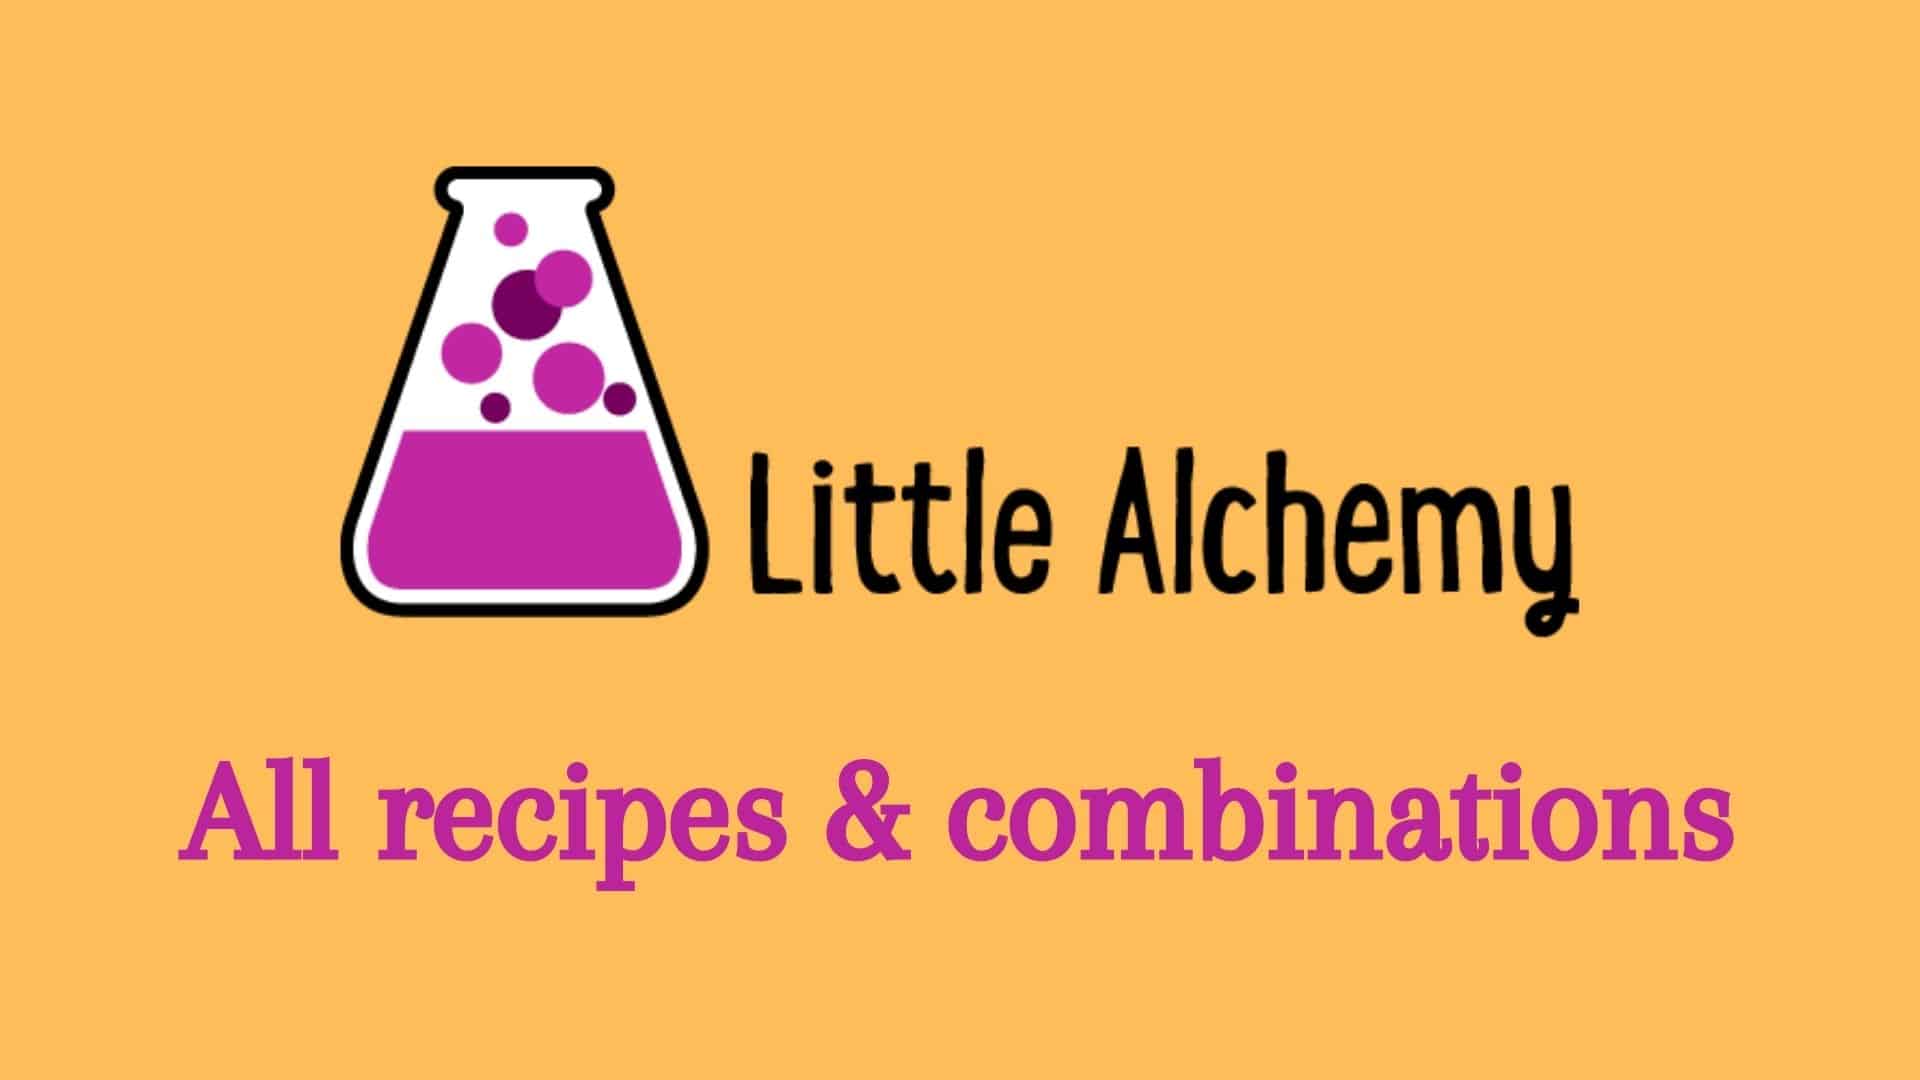 little alchemy logo